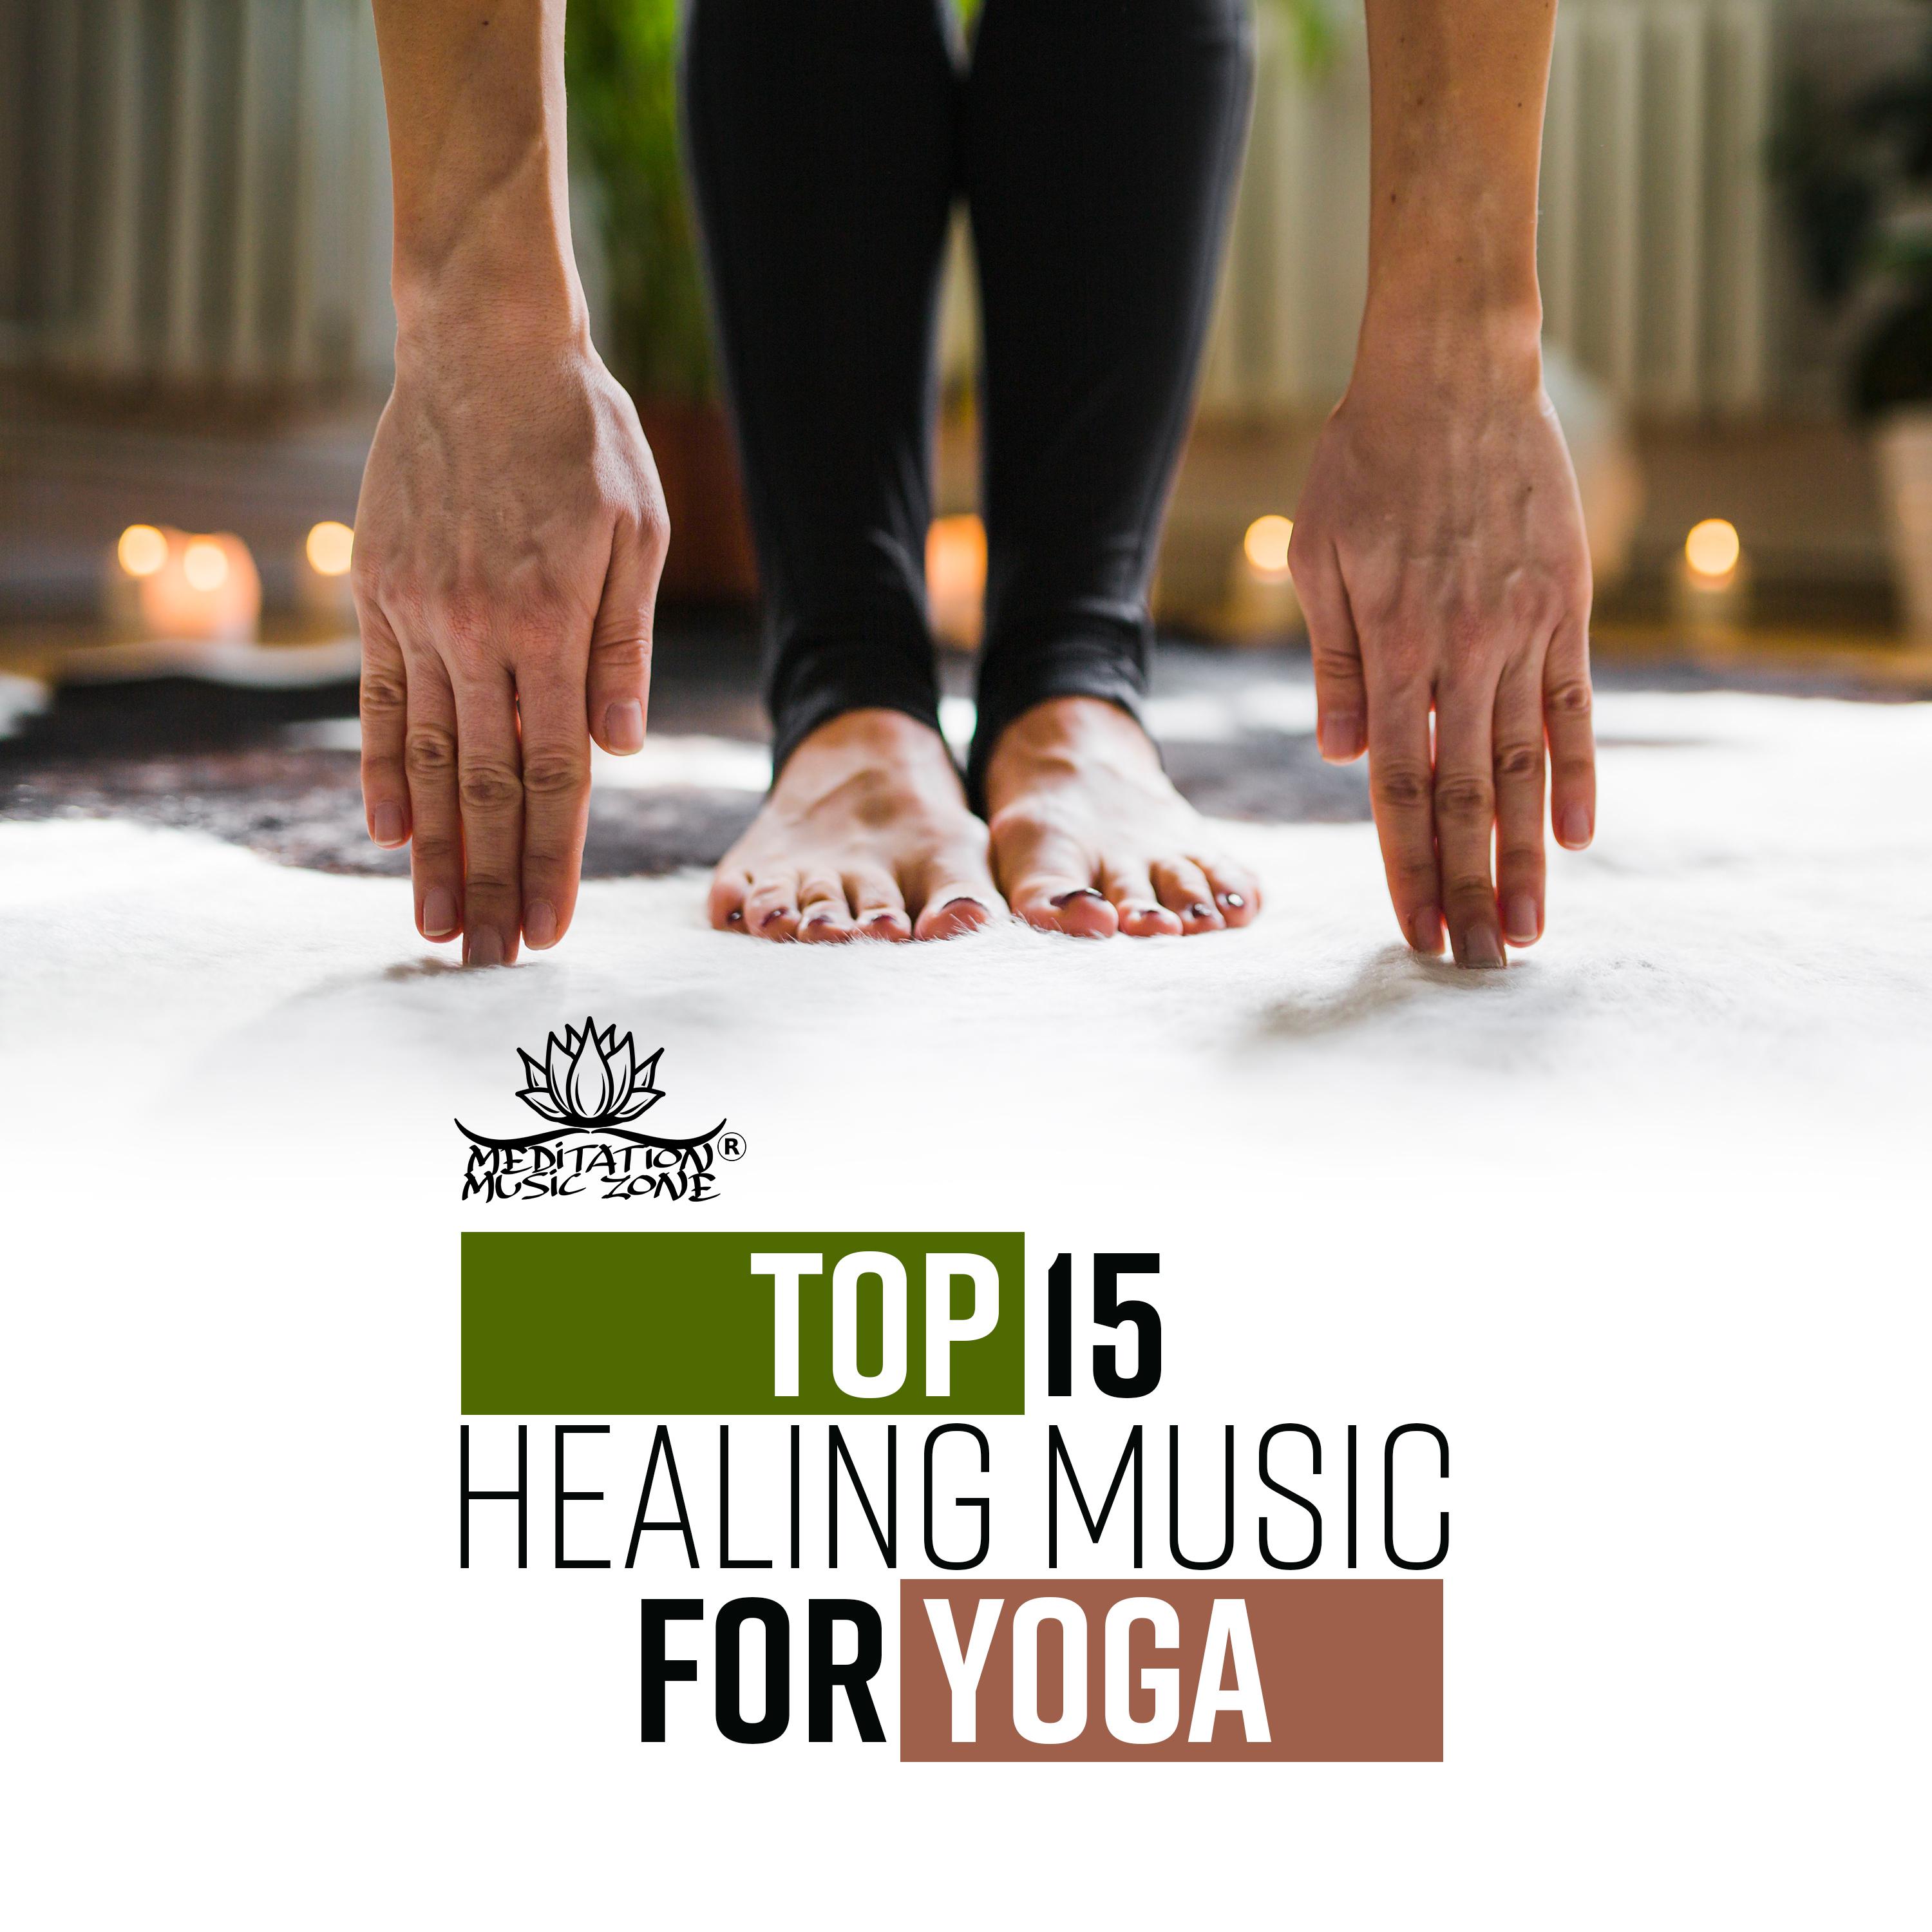 Top 15 Healing Music for Yoga